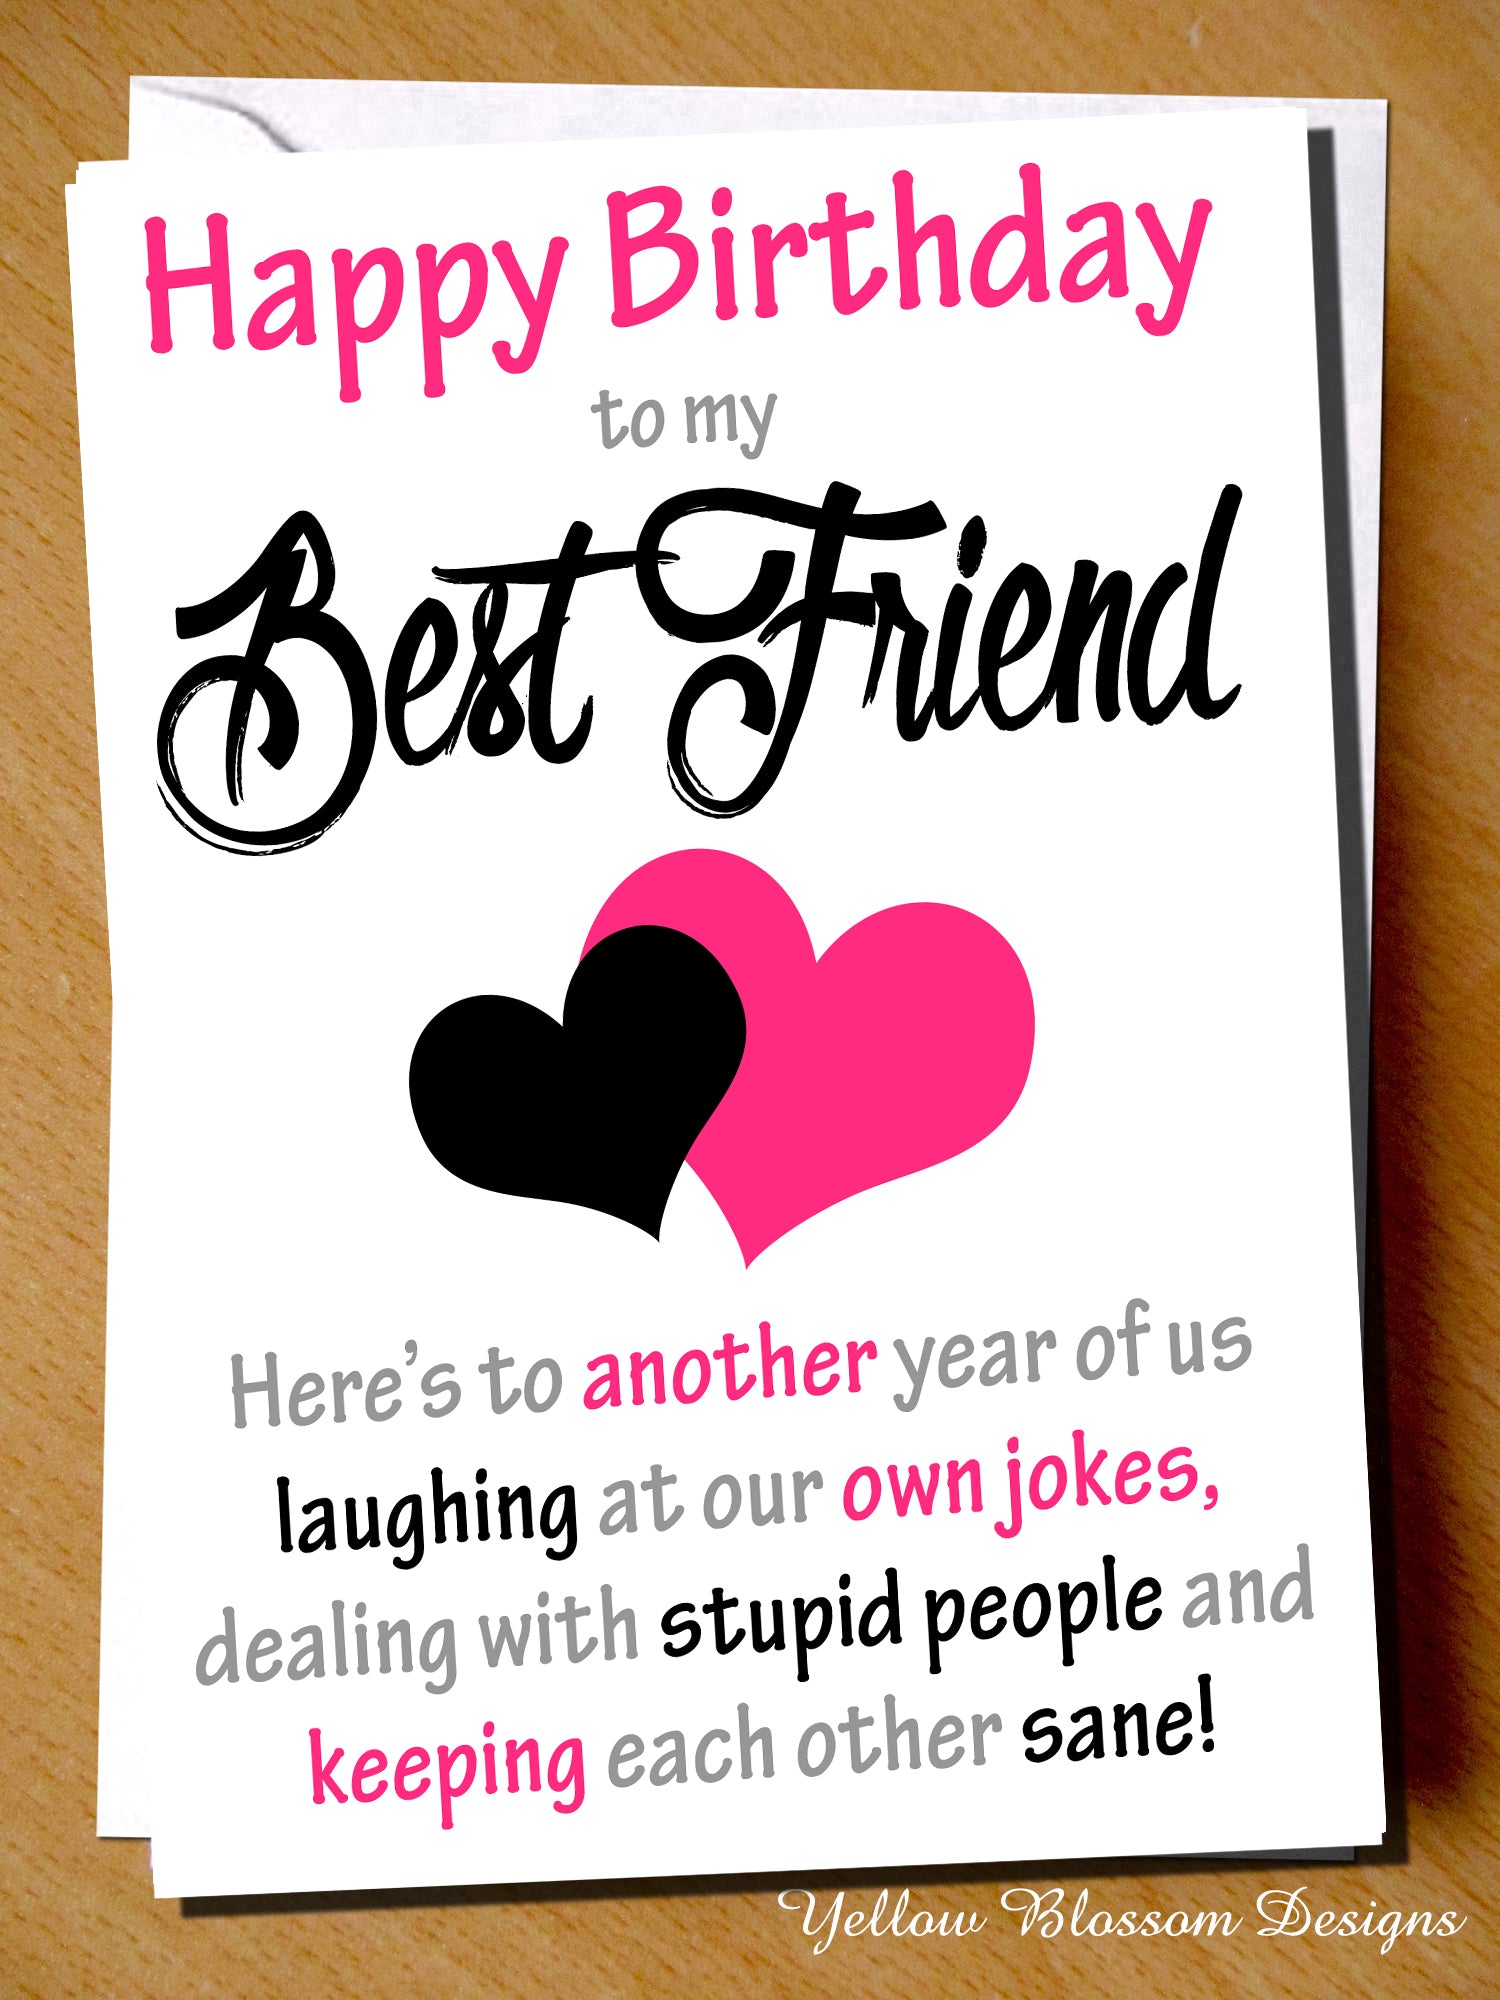 Happy Birthday Card To My Best Friend Own Jokes Stupid People Sane Yellowblossomdesignsltd